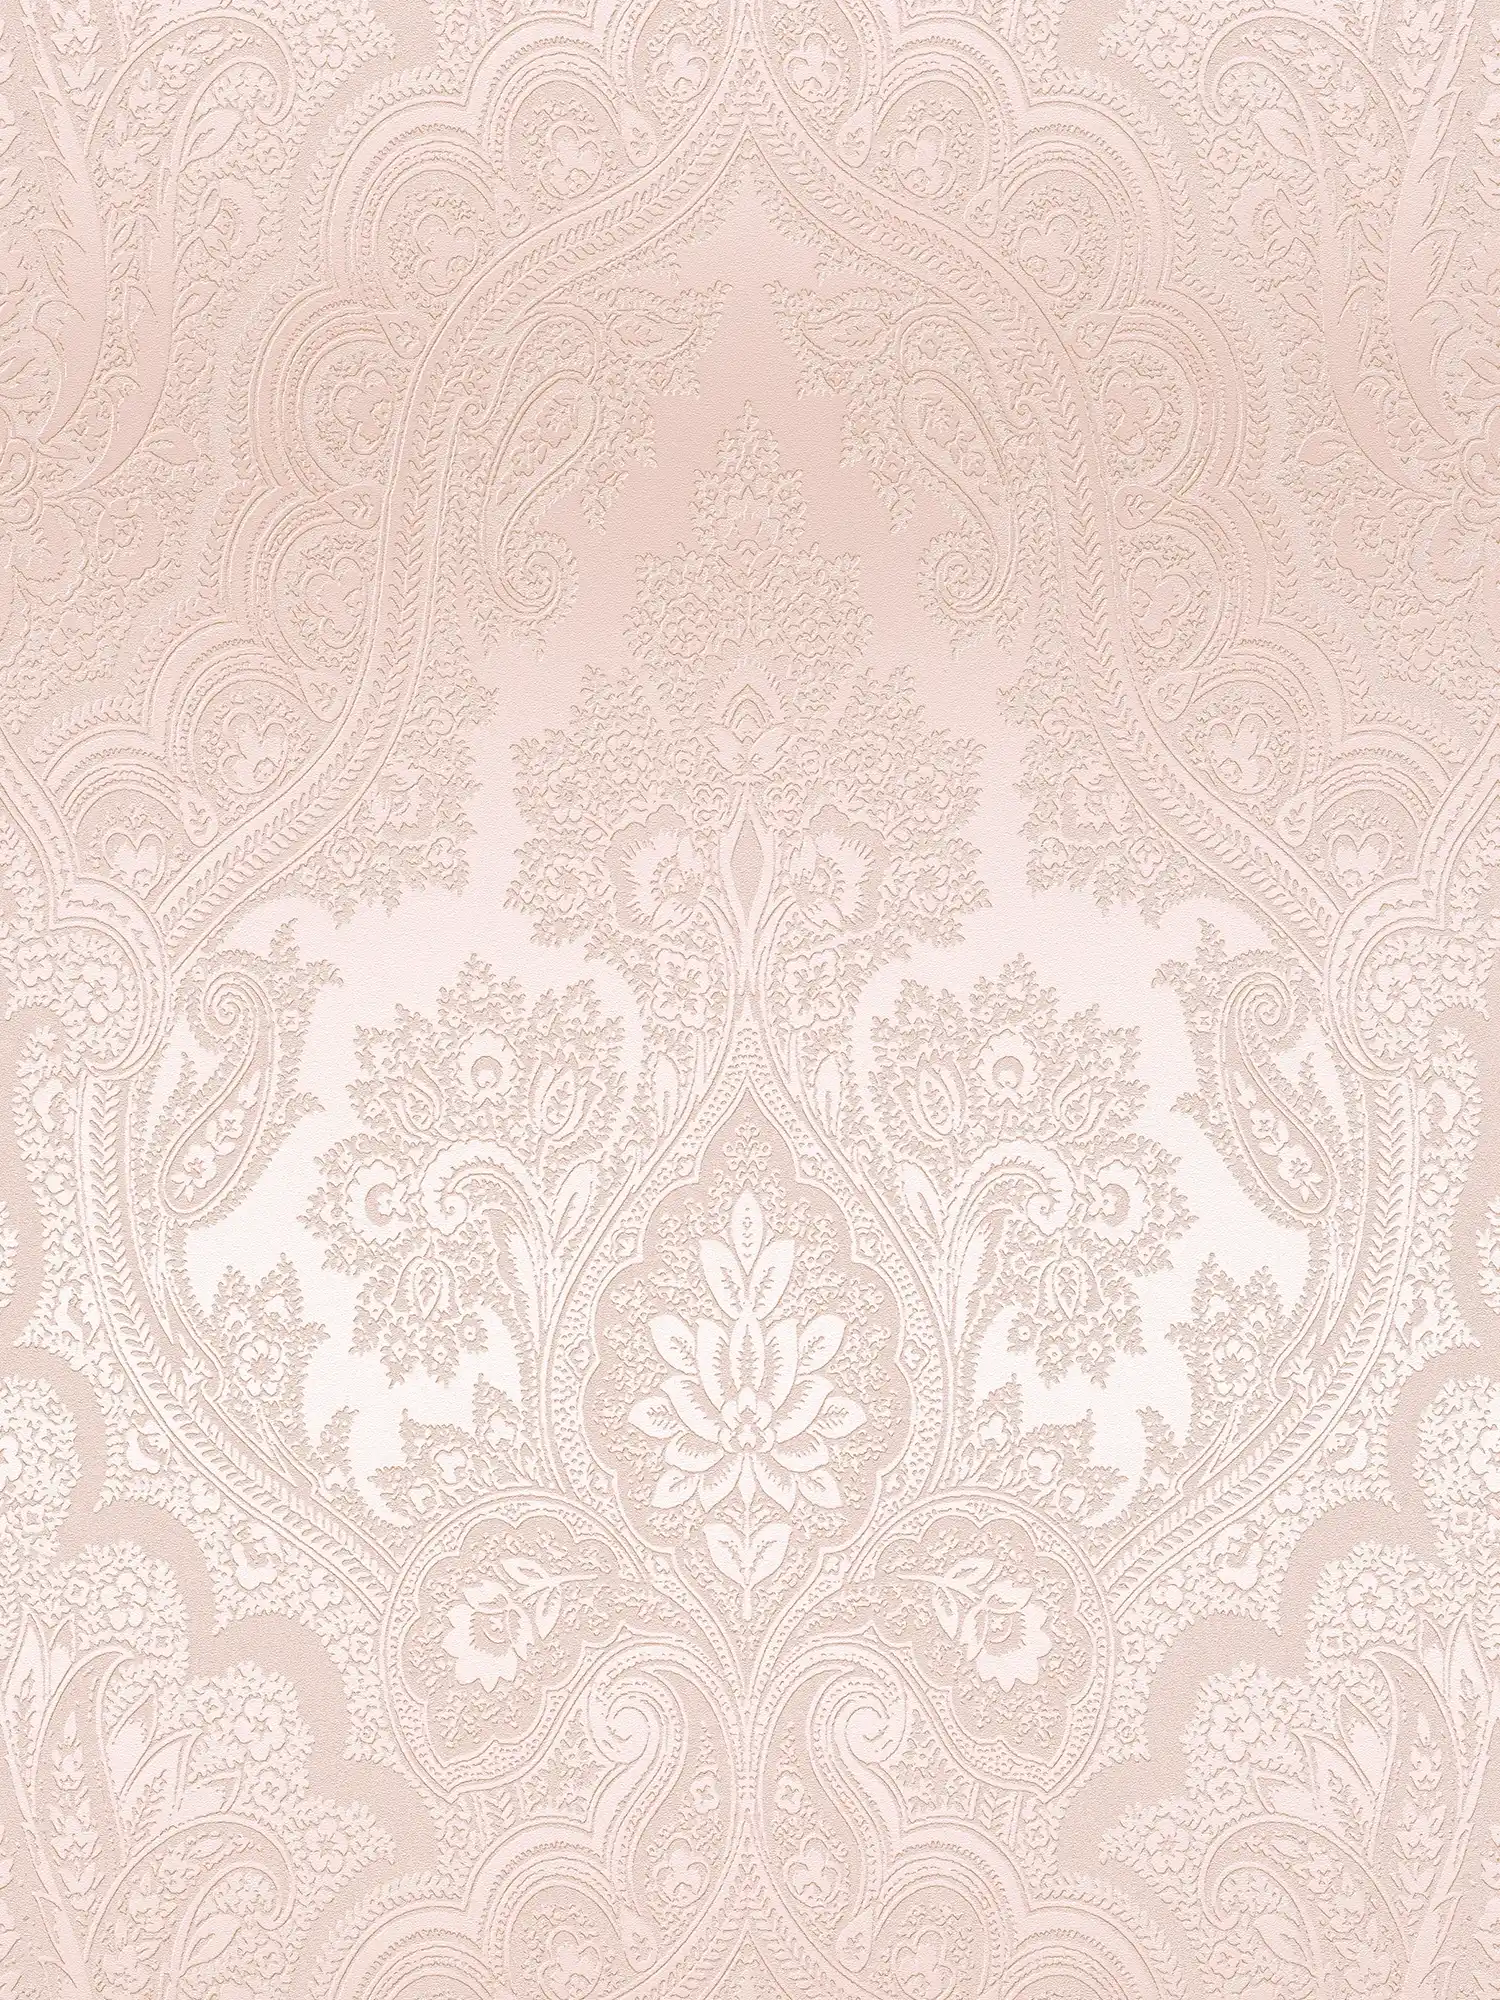 Boho wallpaper pink with ornament pattern - metallic, pink
